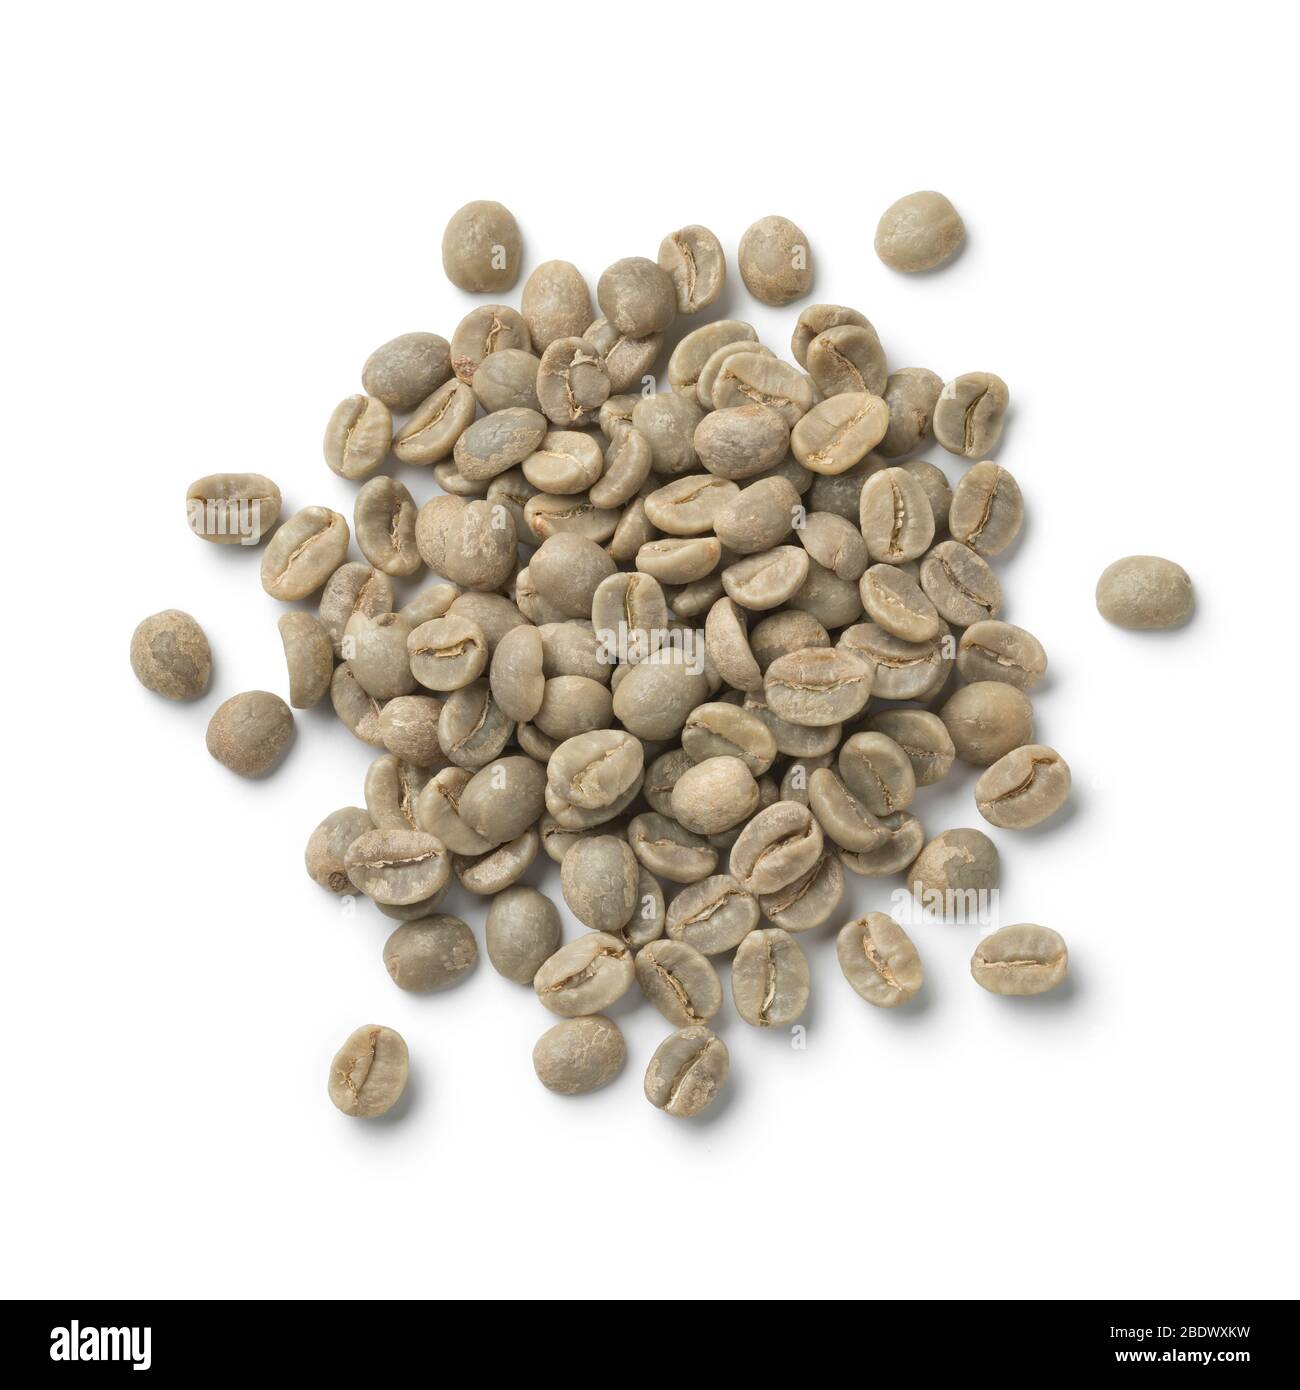 Heap of raw Pamwamba coffee beans from Malawi isolated on white background Stock Photo